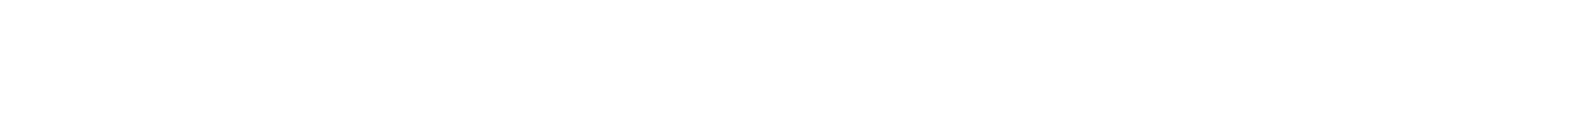 Berkshire Hathaway  logo large for dark backgrounds (transparent PNG)